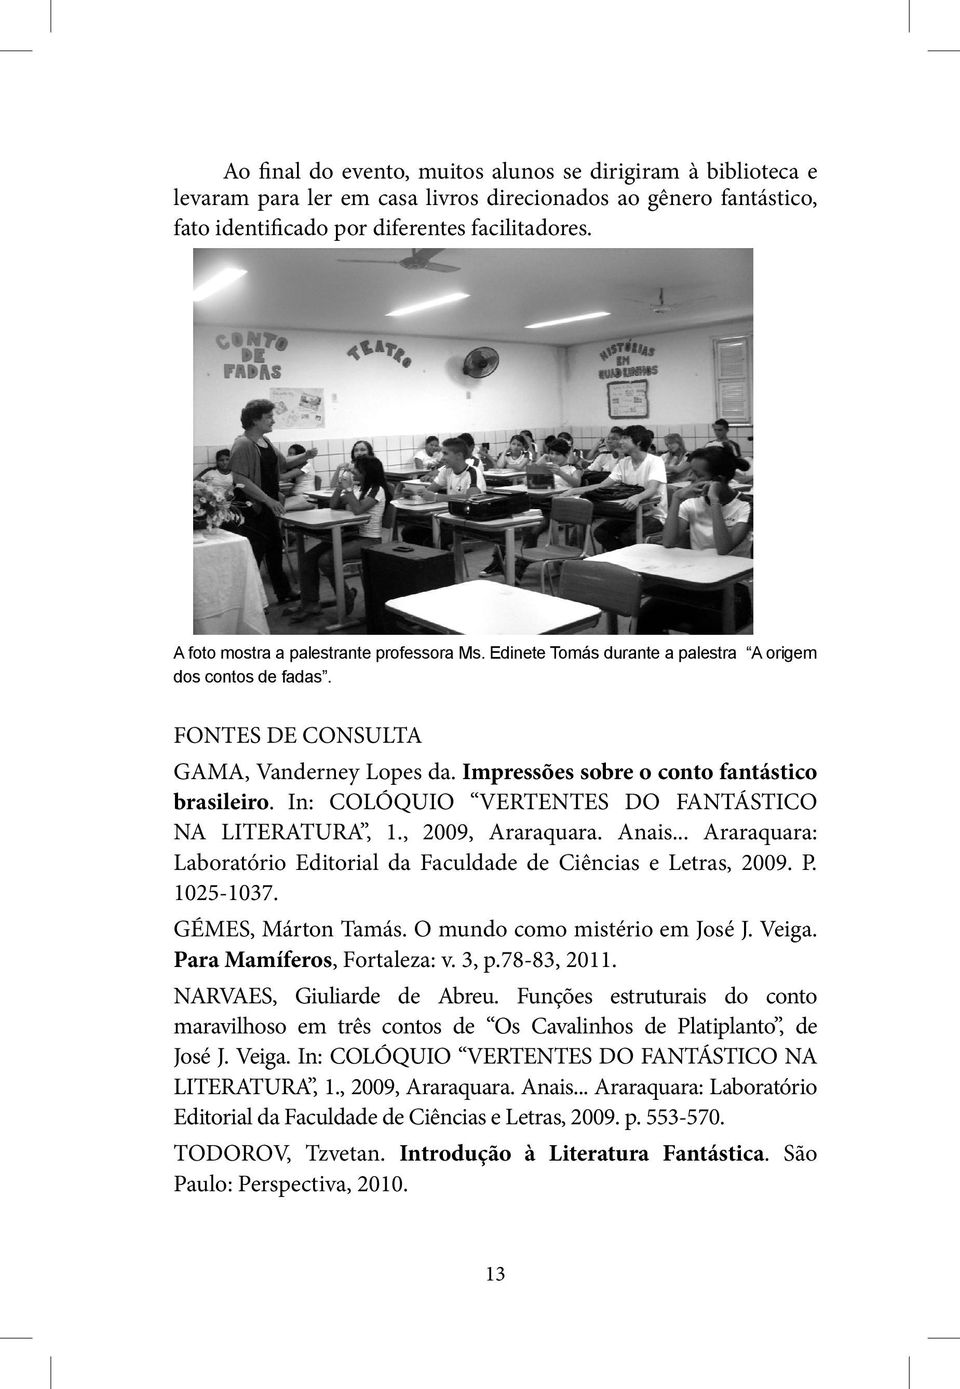 In: COLÓQUIO VERTENTES DO FANTÁSTICO NA LITERATURA, 1., 2009, Araraquara. Anais... Araraquara: Laboratório Editorial da Faculdade de Ciências e Letras, 2009. P. 1025-1037. GÉMES, Márton Tamás.